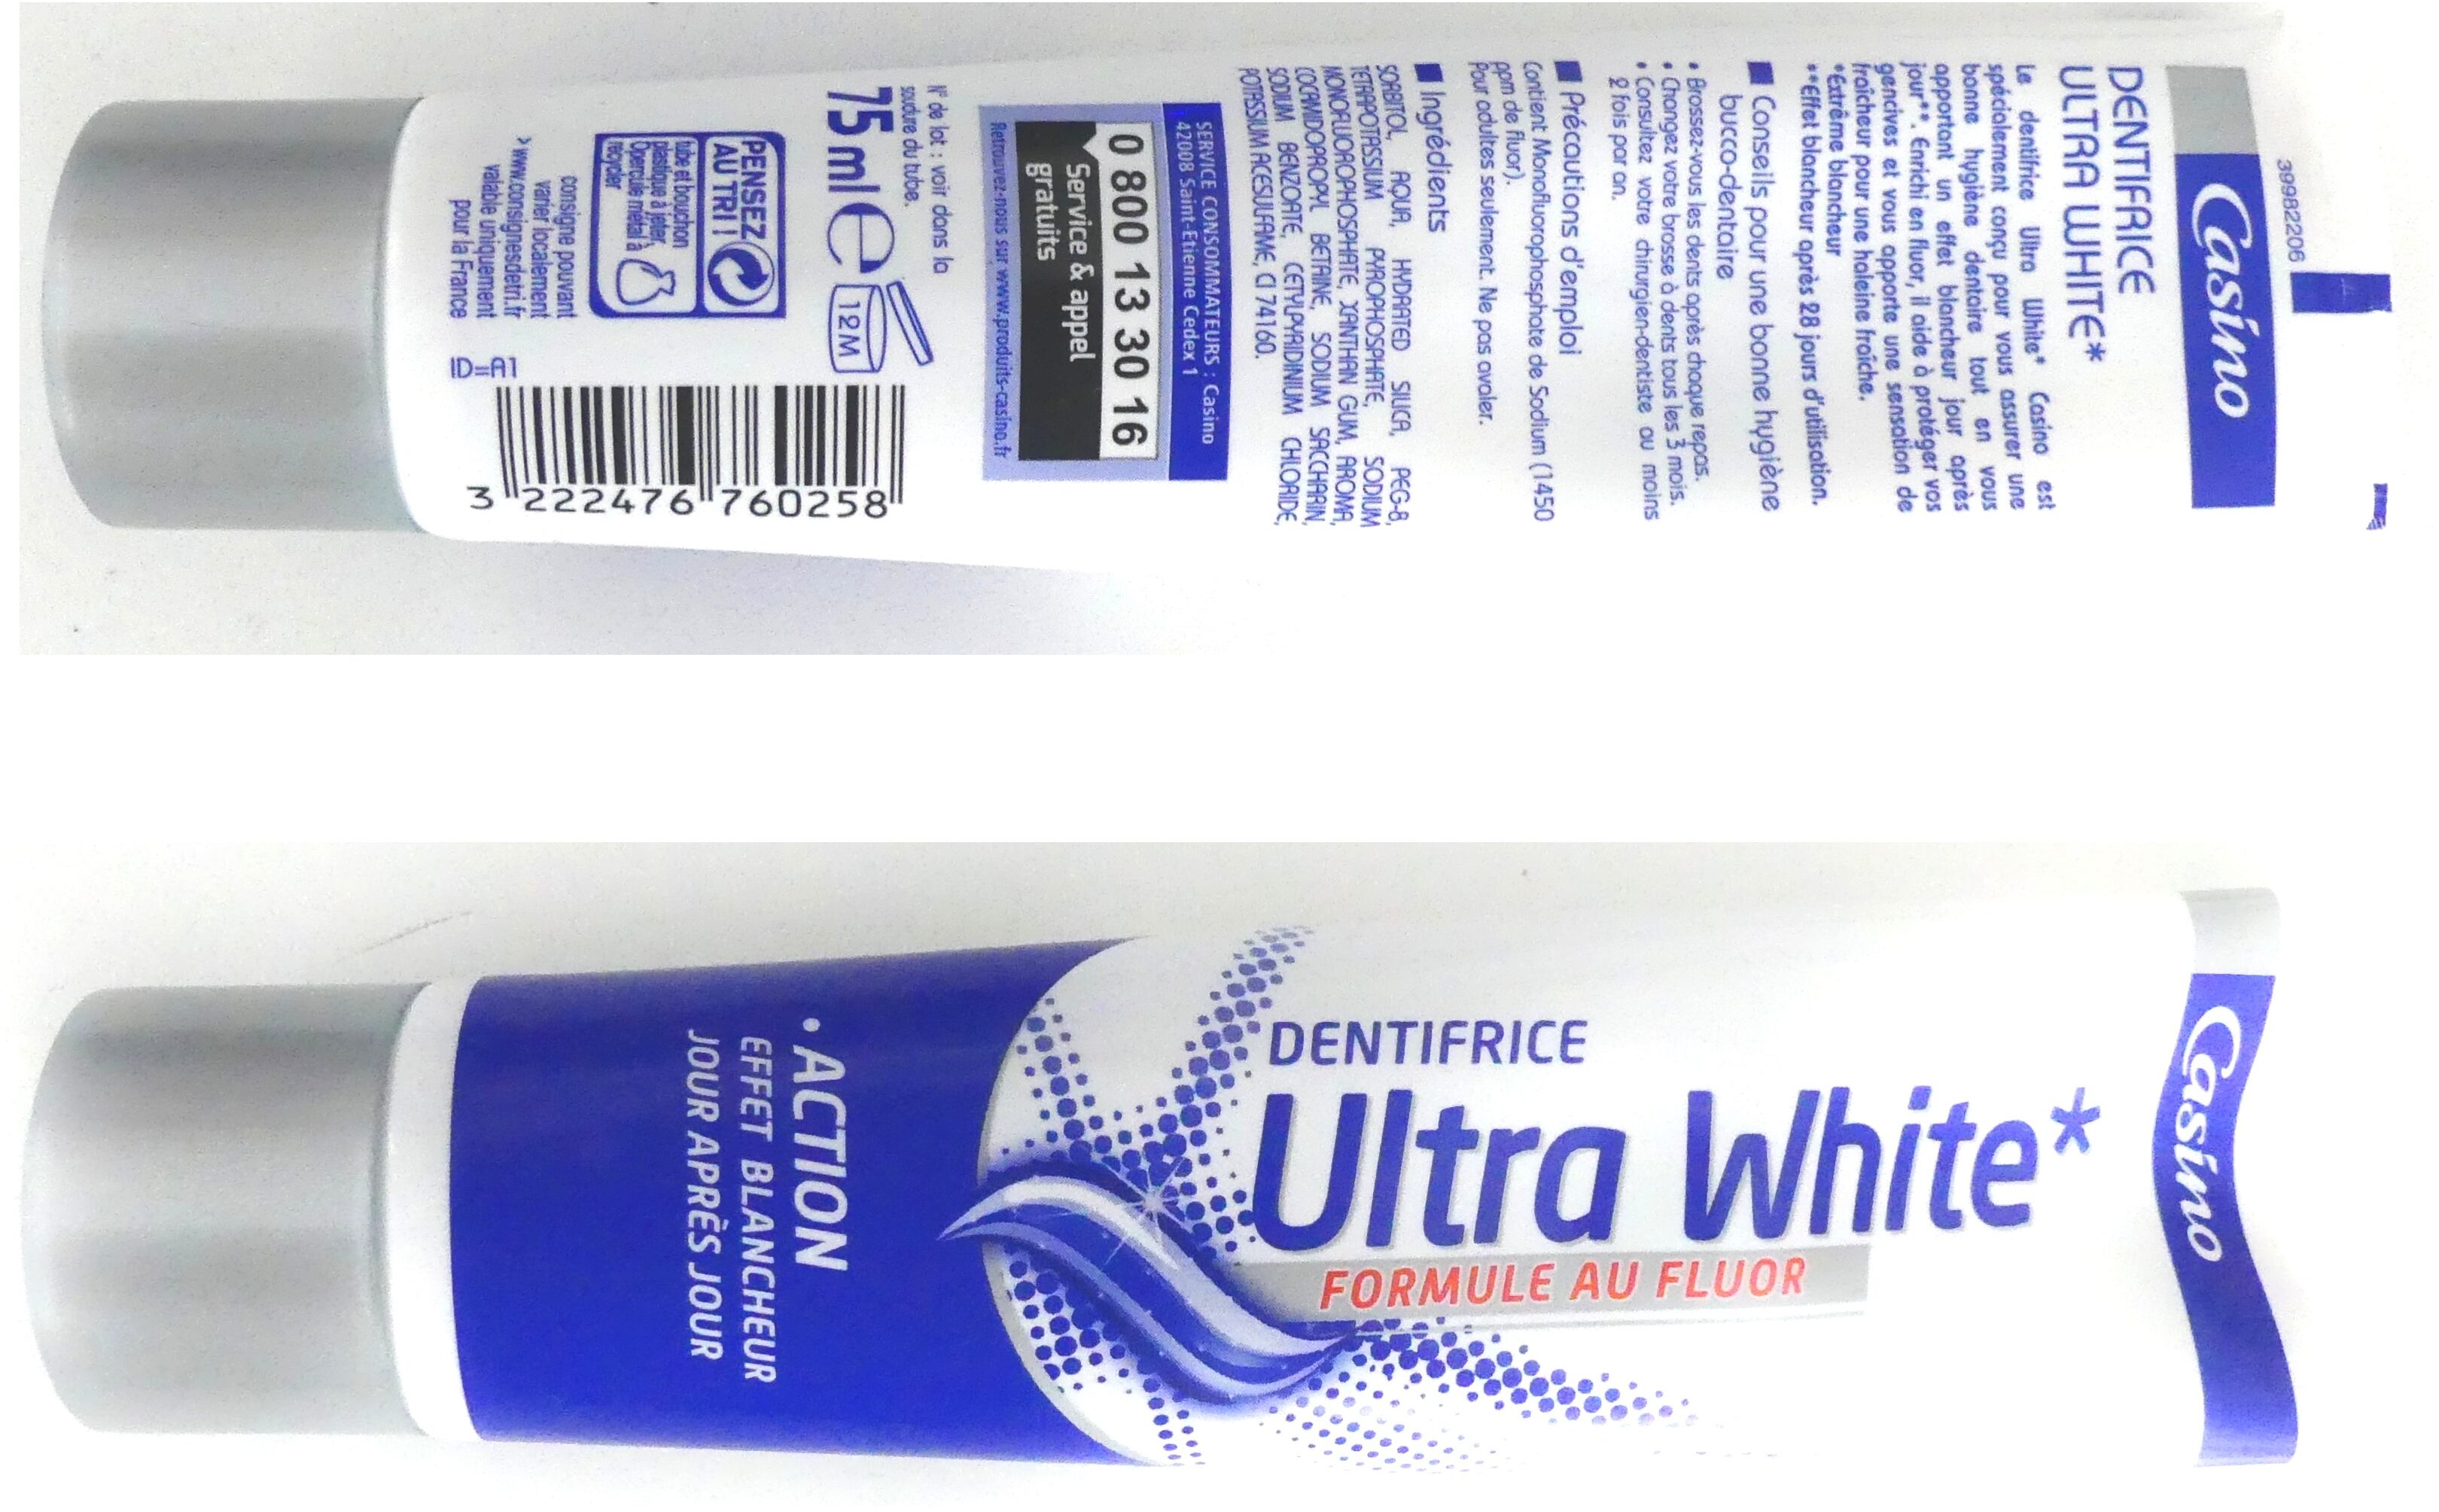 Dentifrice ultra white - 製品 - fr